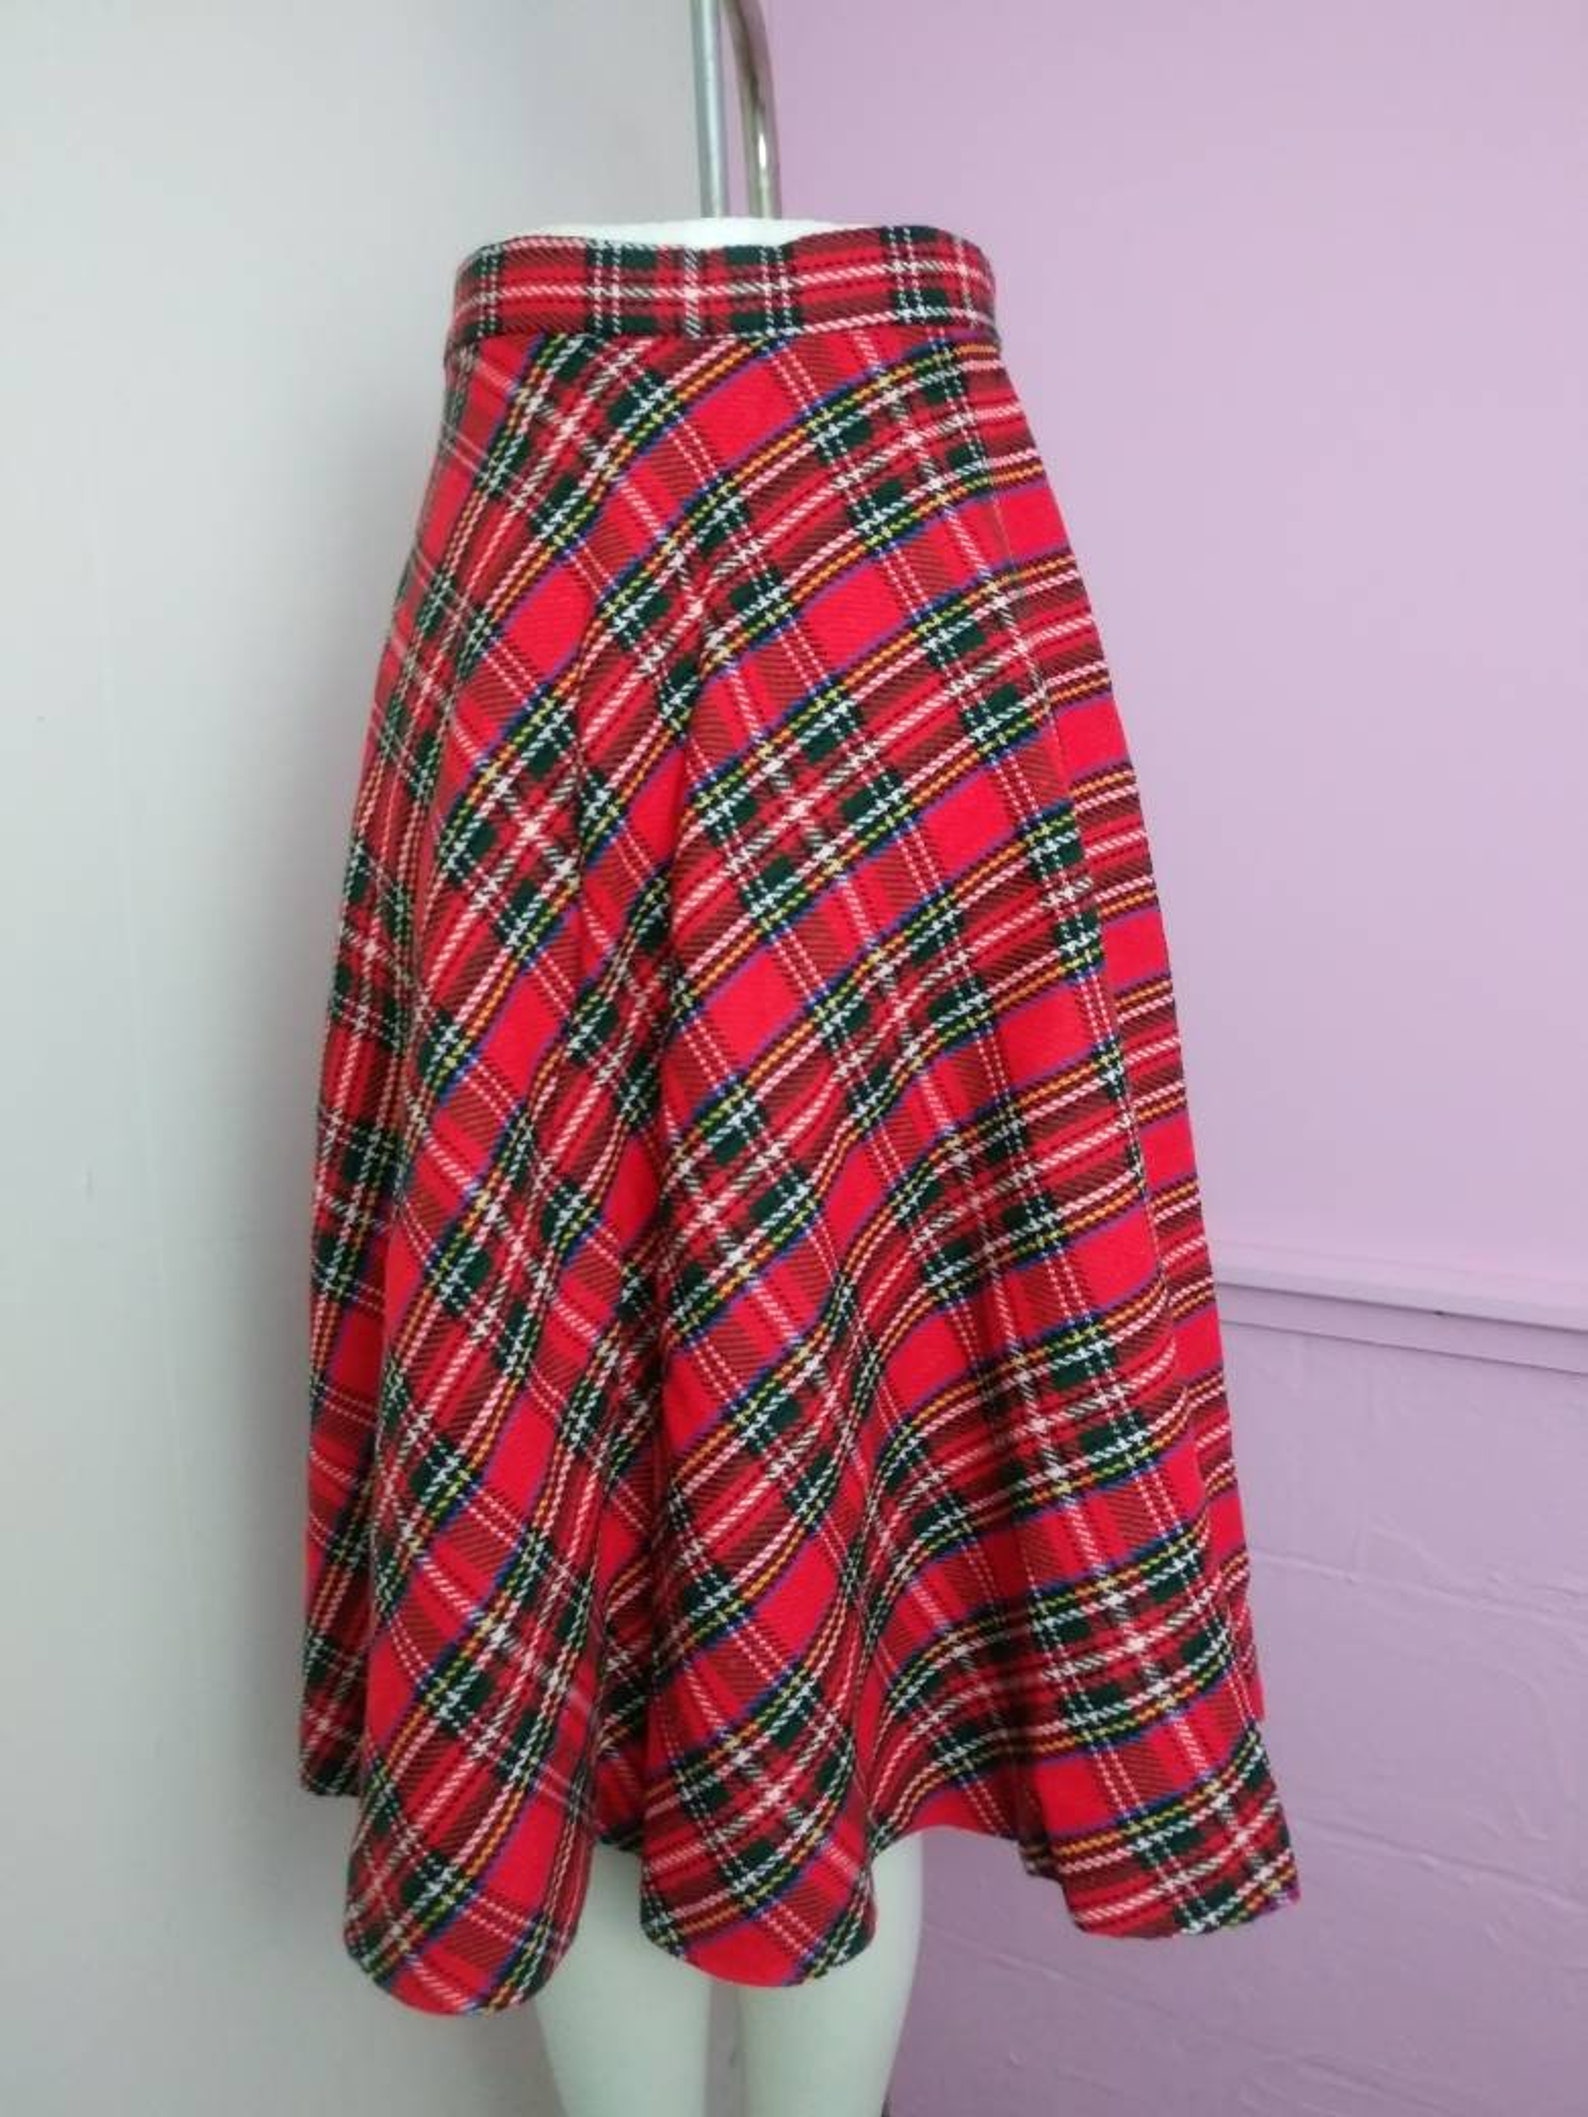 Vintage Red Tartan Plaid Skirt Rockabilly Pin-up Girl Clothing - Etsy